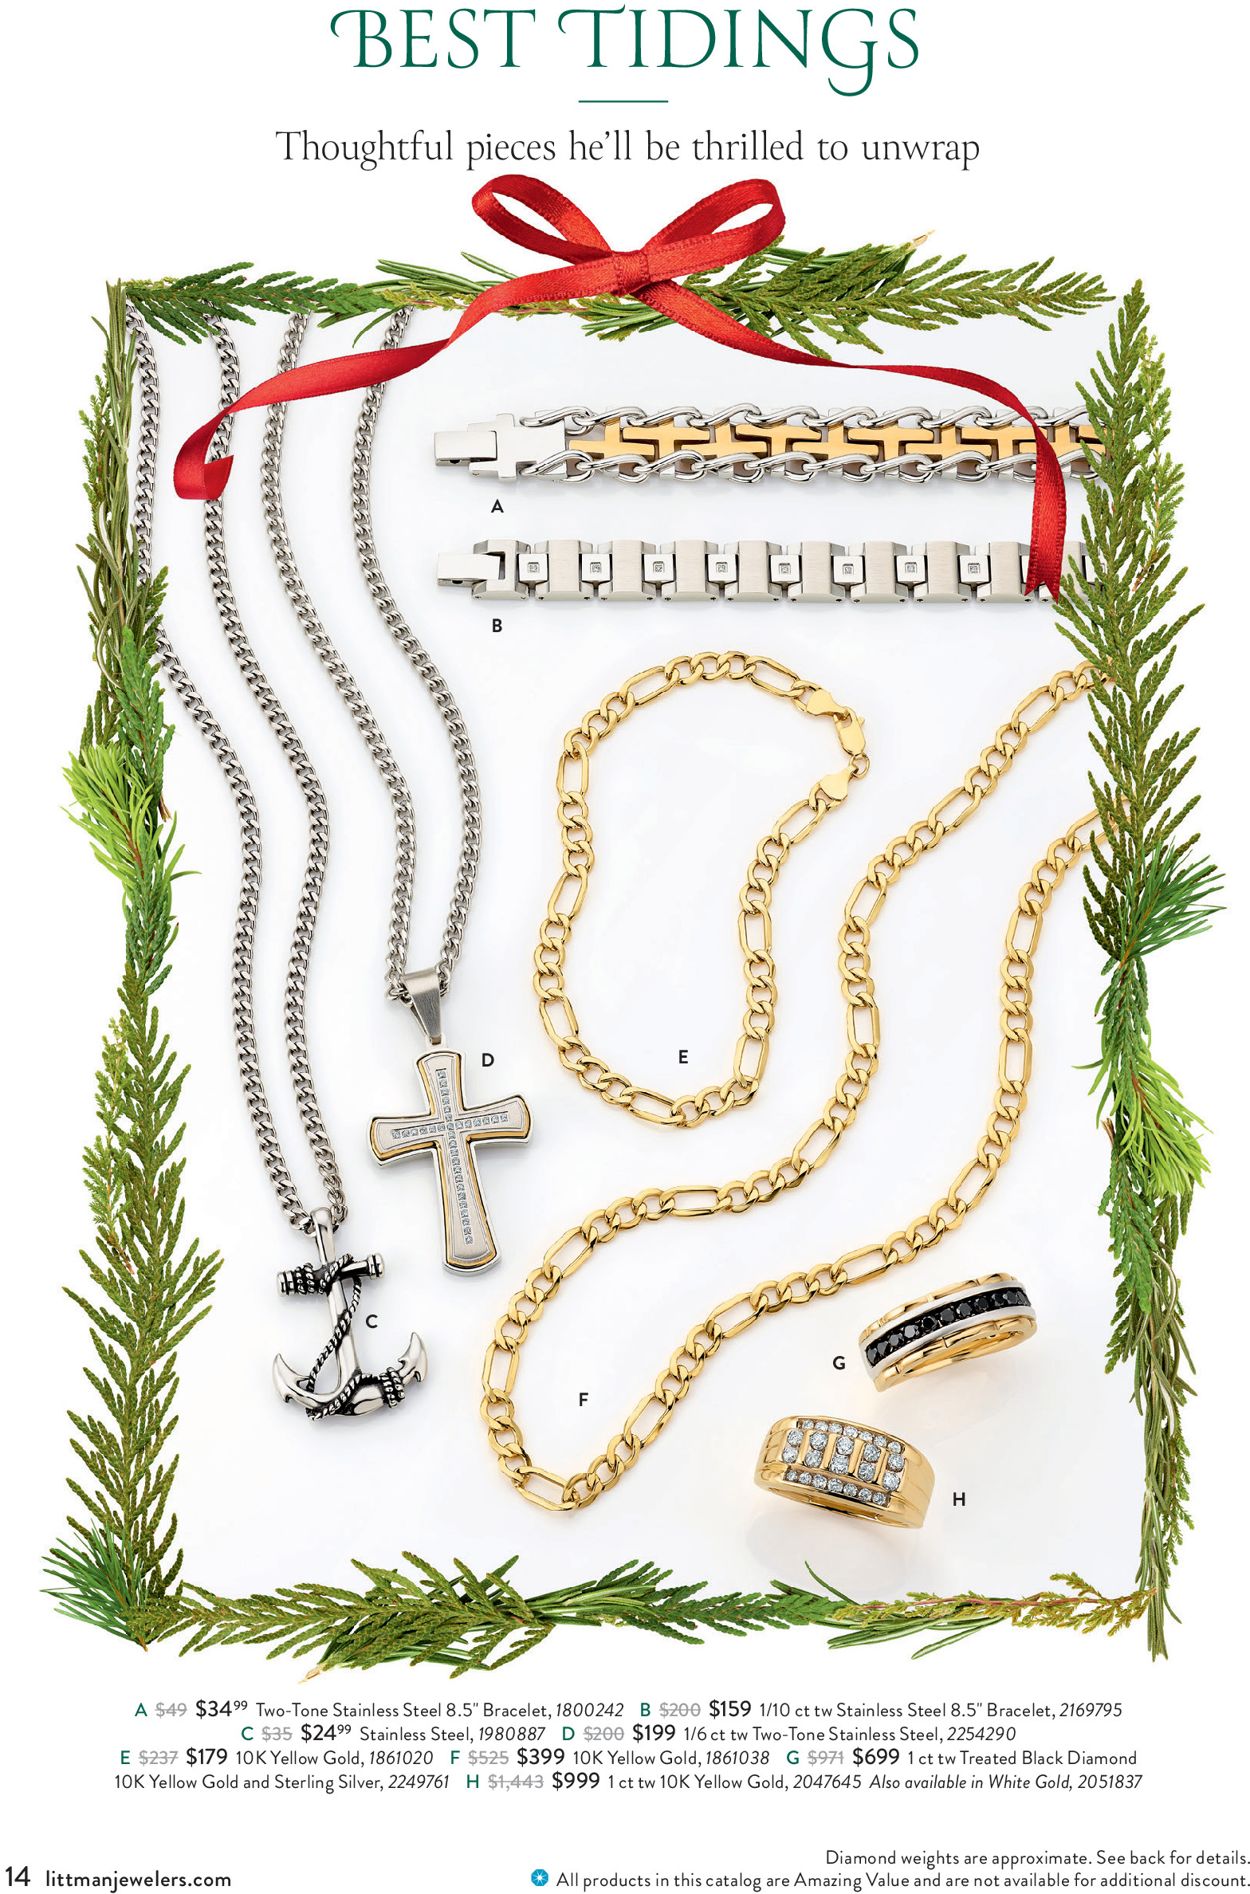 Catalogue Littman Jewelers Holiday Catalog 2020  from 12/18/2020